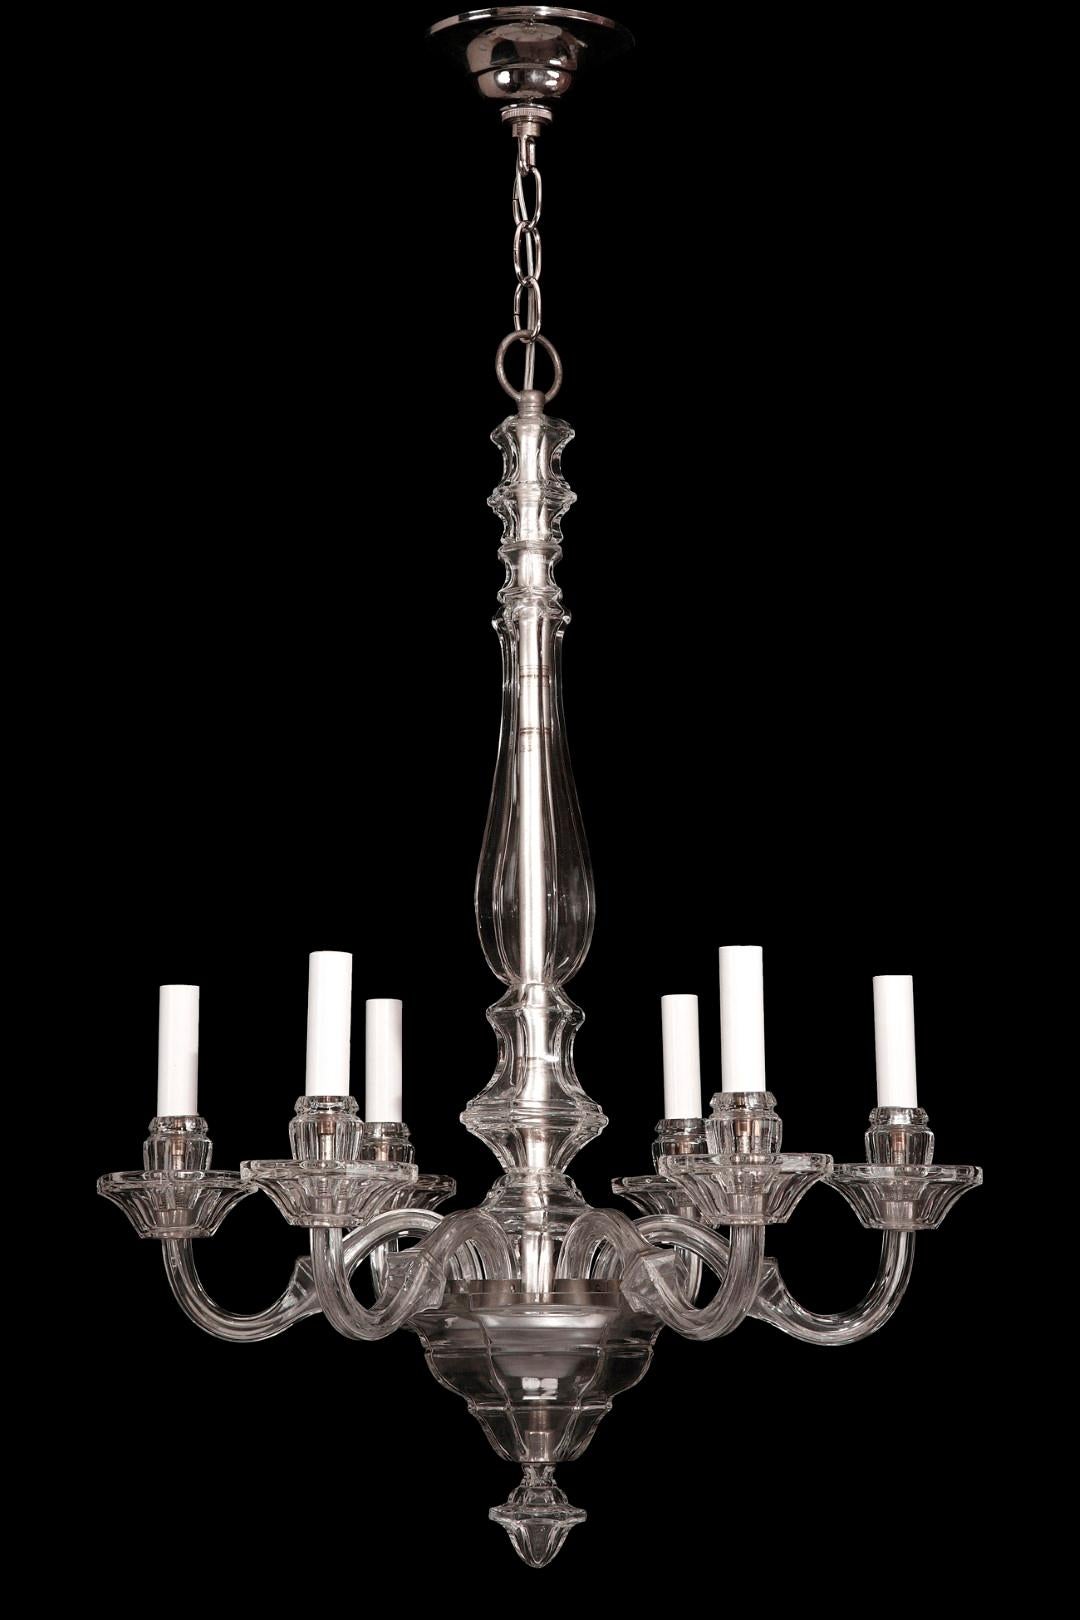 1930s style chandelier